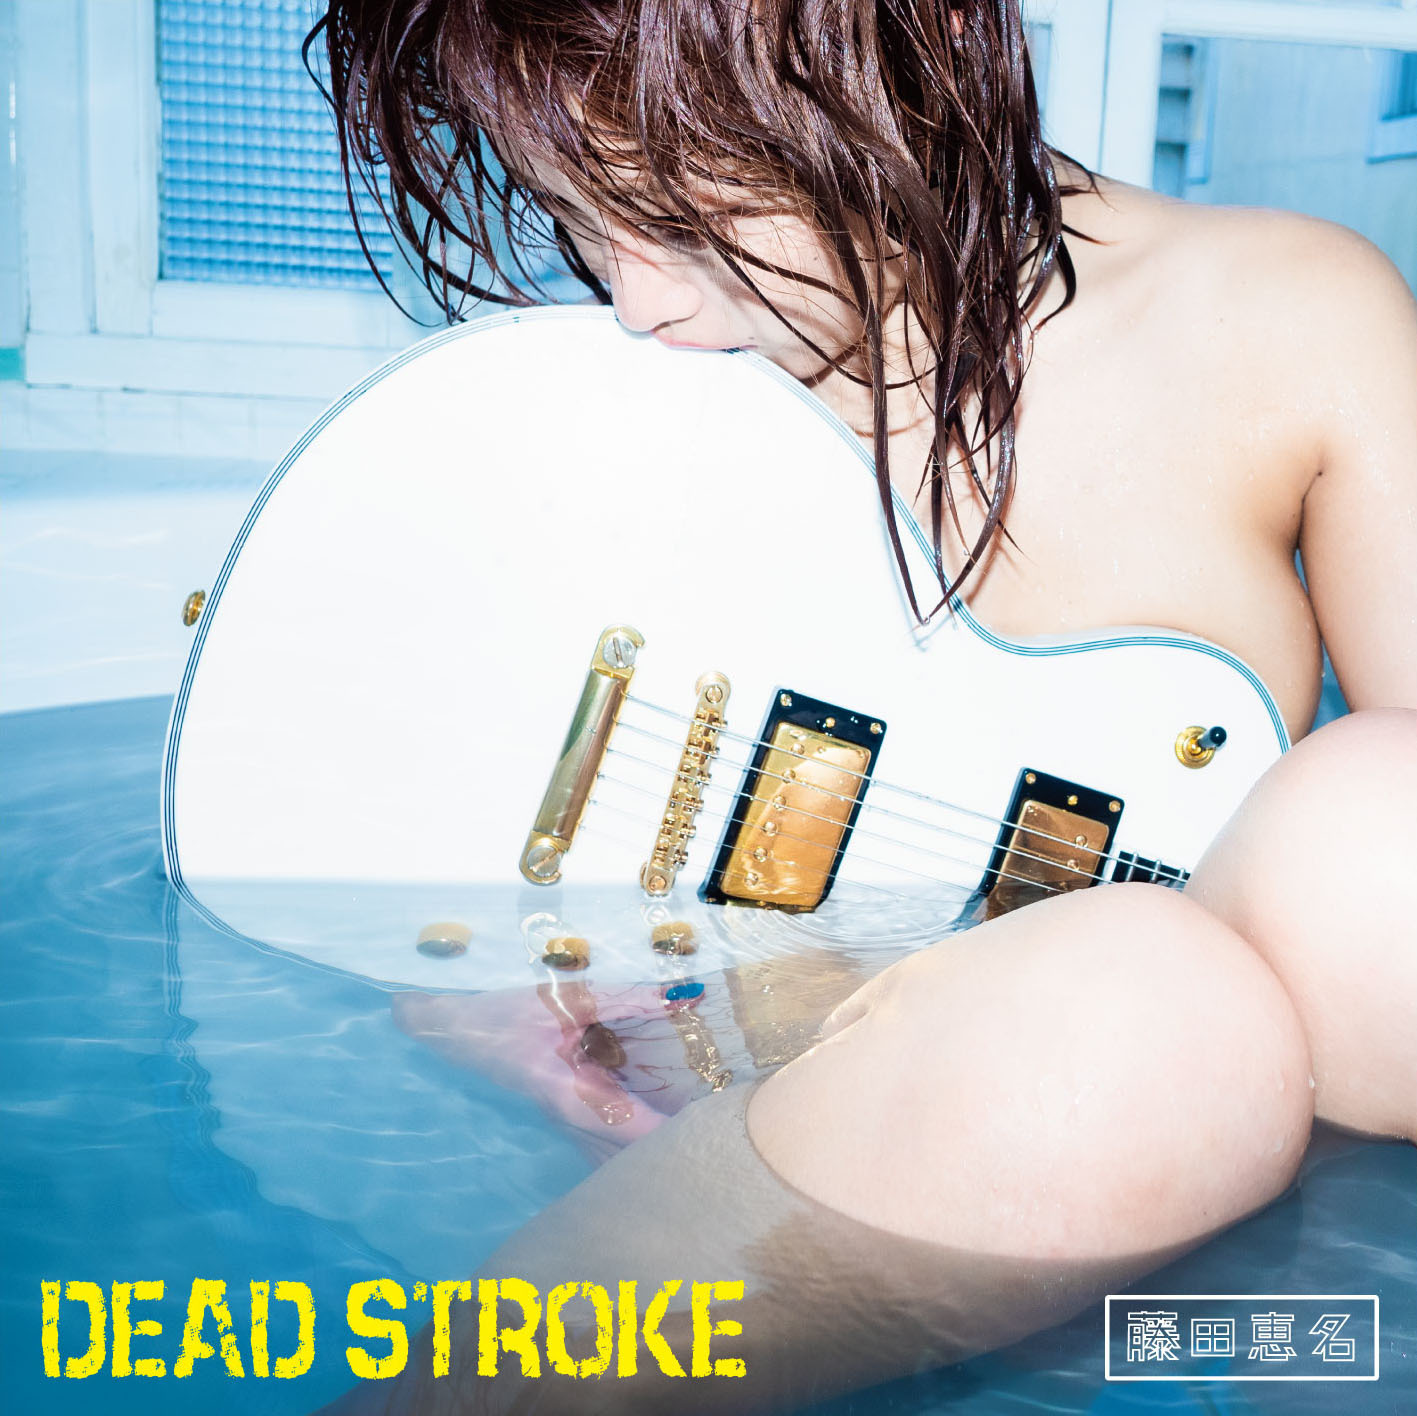 「DEAD STROKE」エナ盤ジャケット